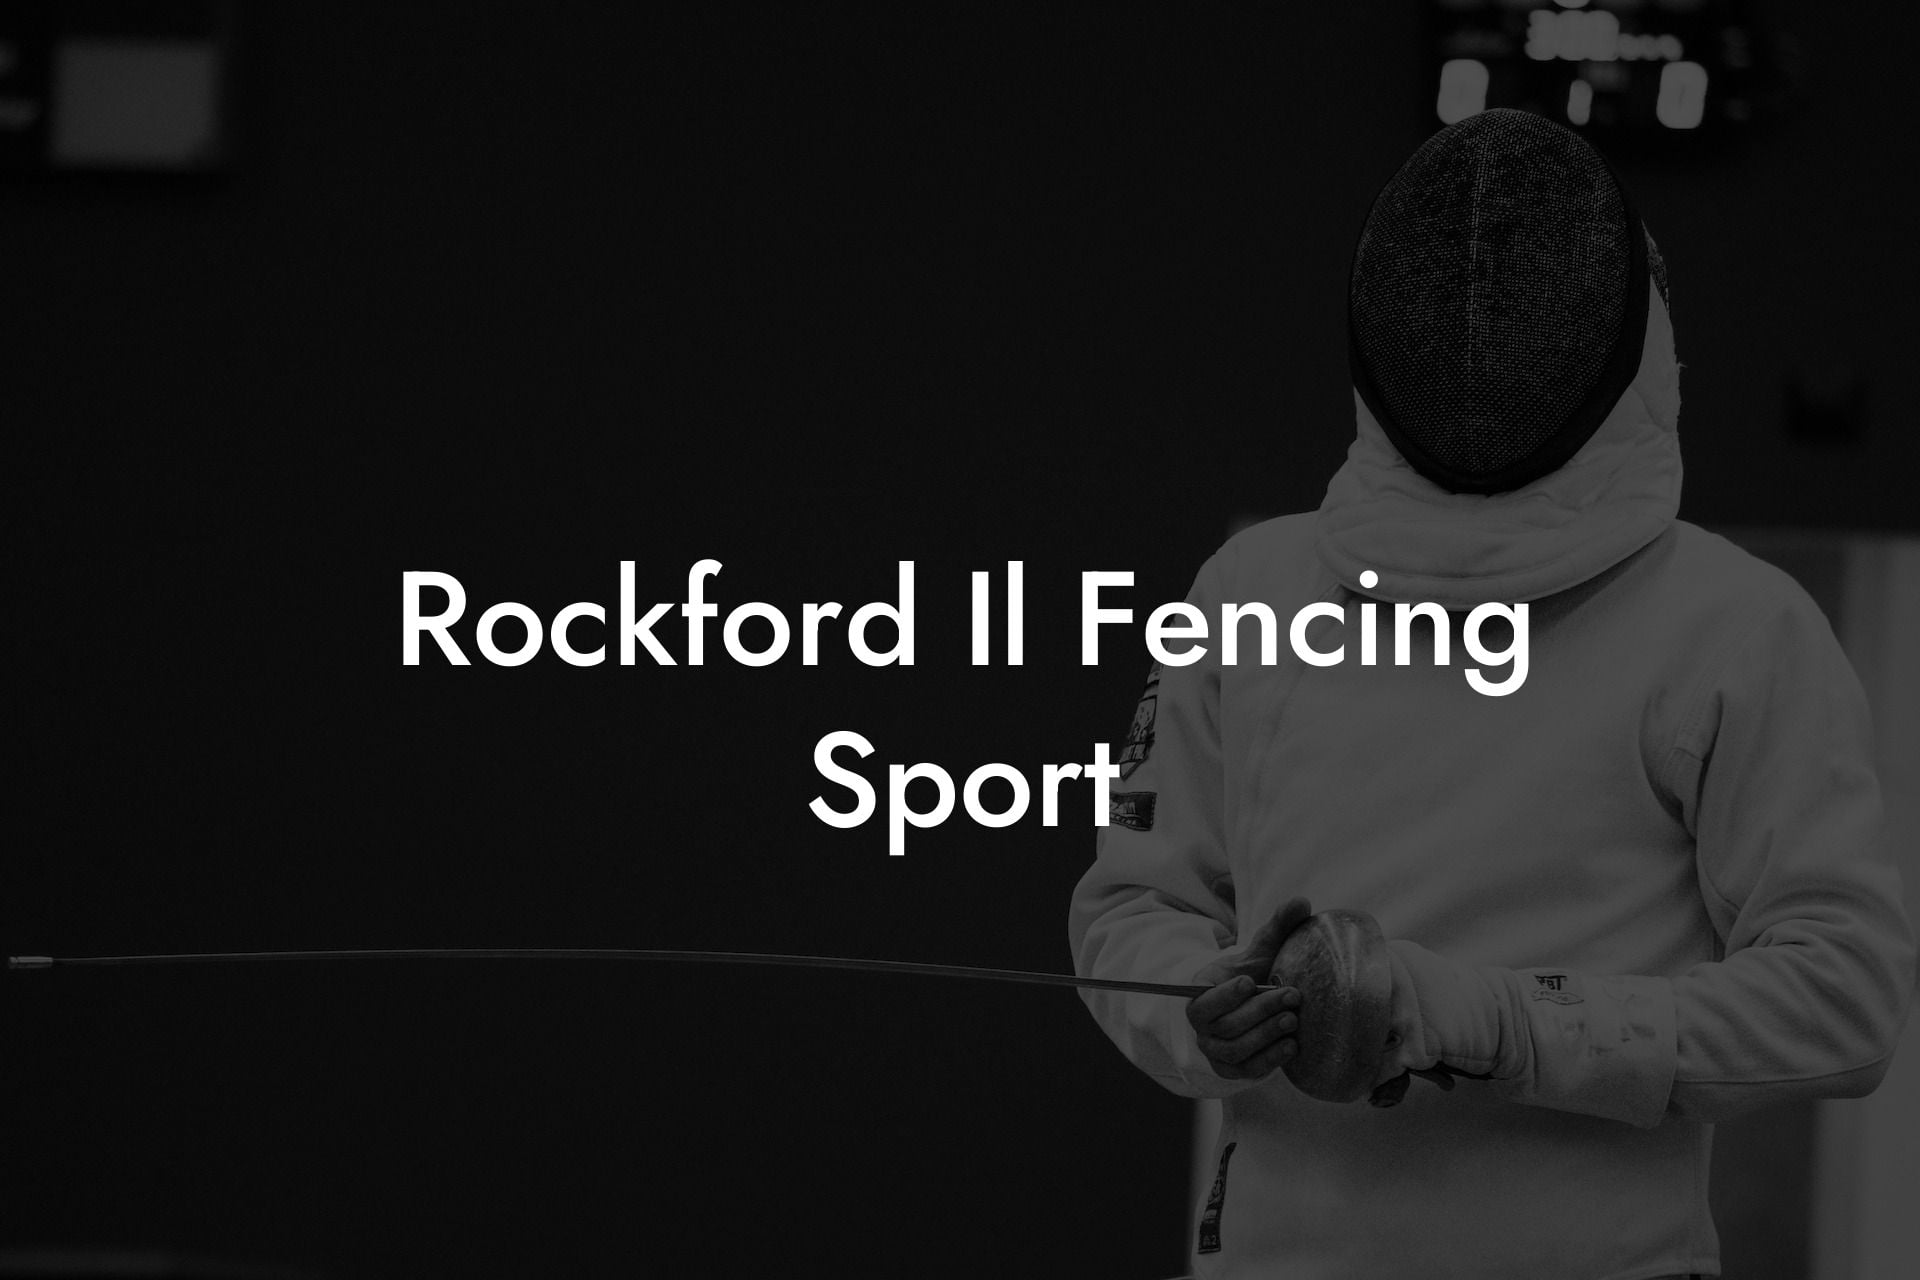 Rockford Il Fencing Sport